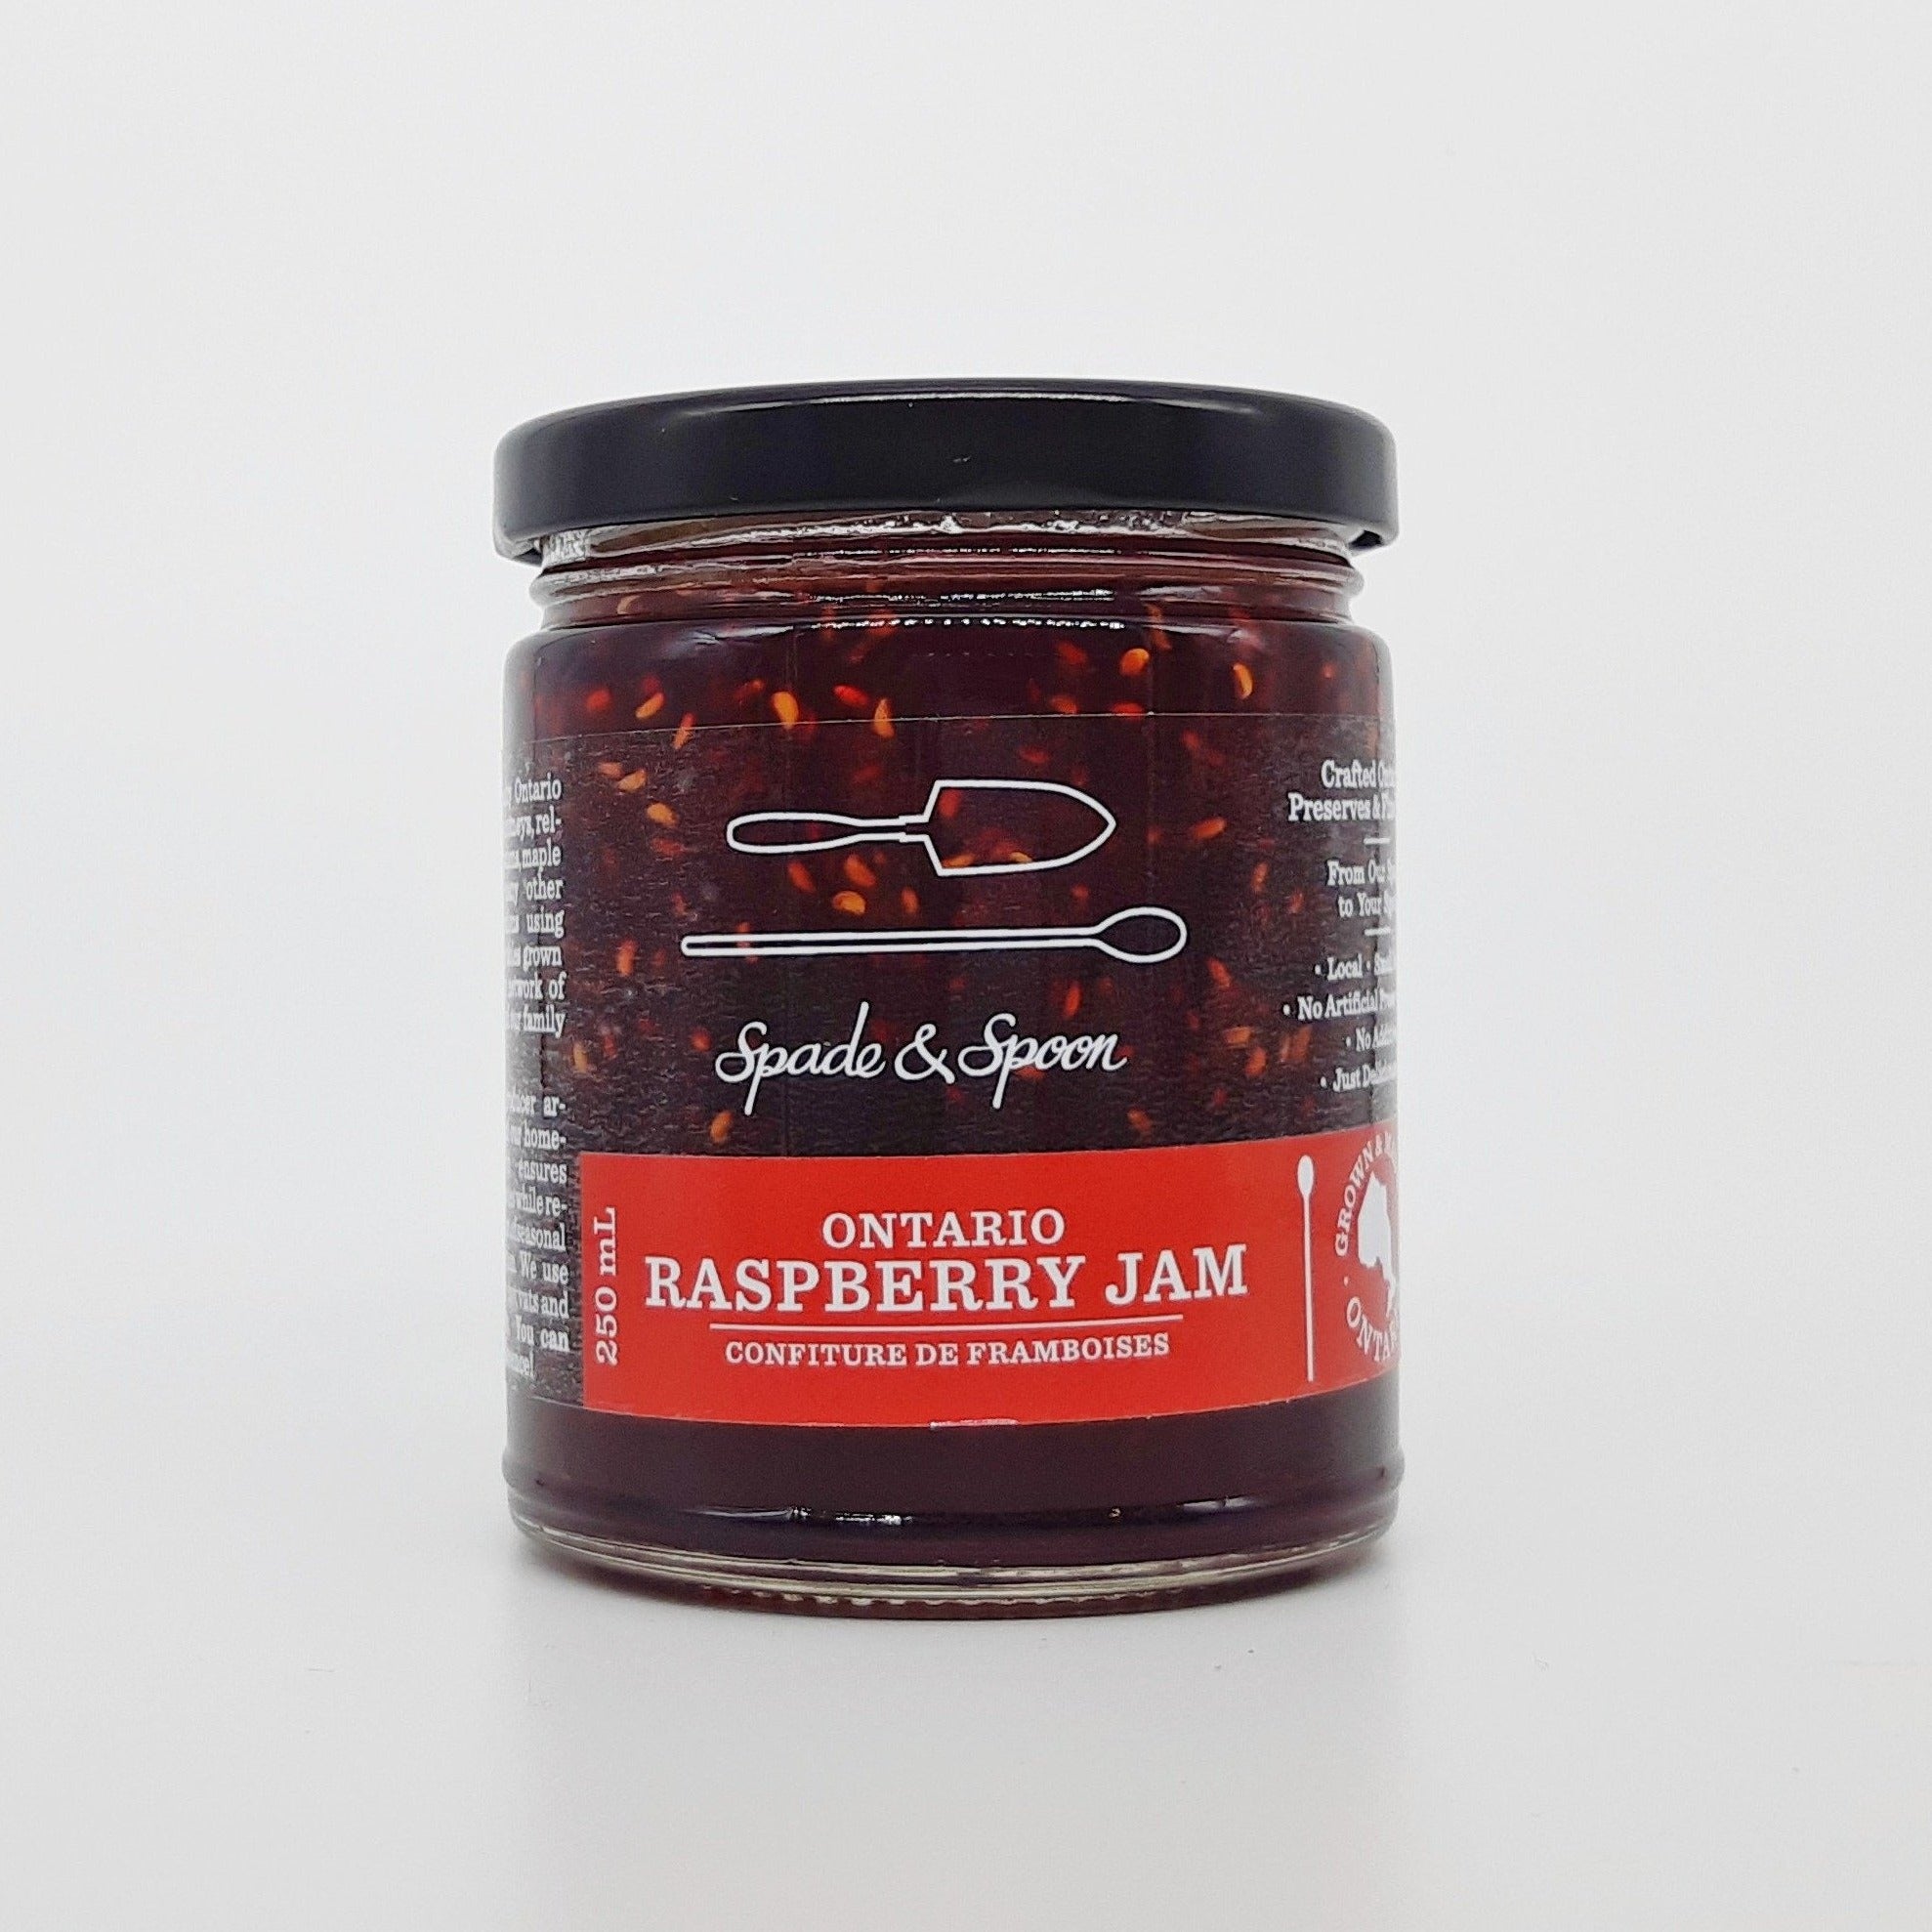 Jar of raspberry jam on a white background